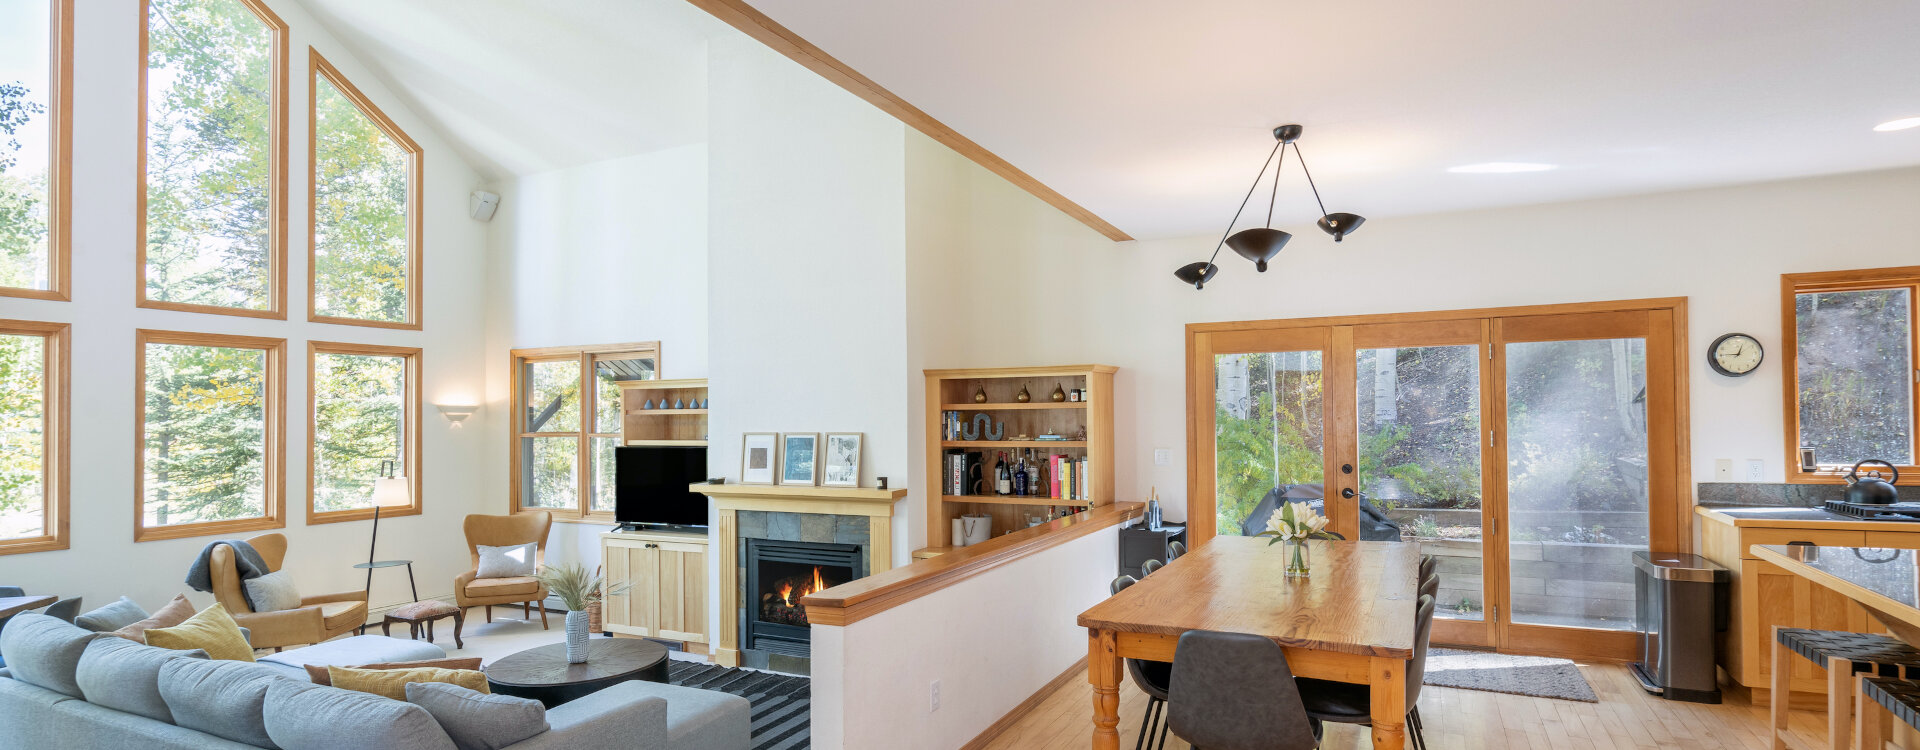 1.01-telluride-haven-on-hang-glider-living-room-dining-room